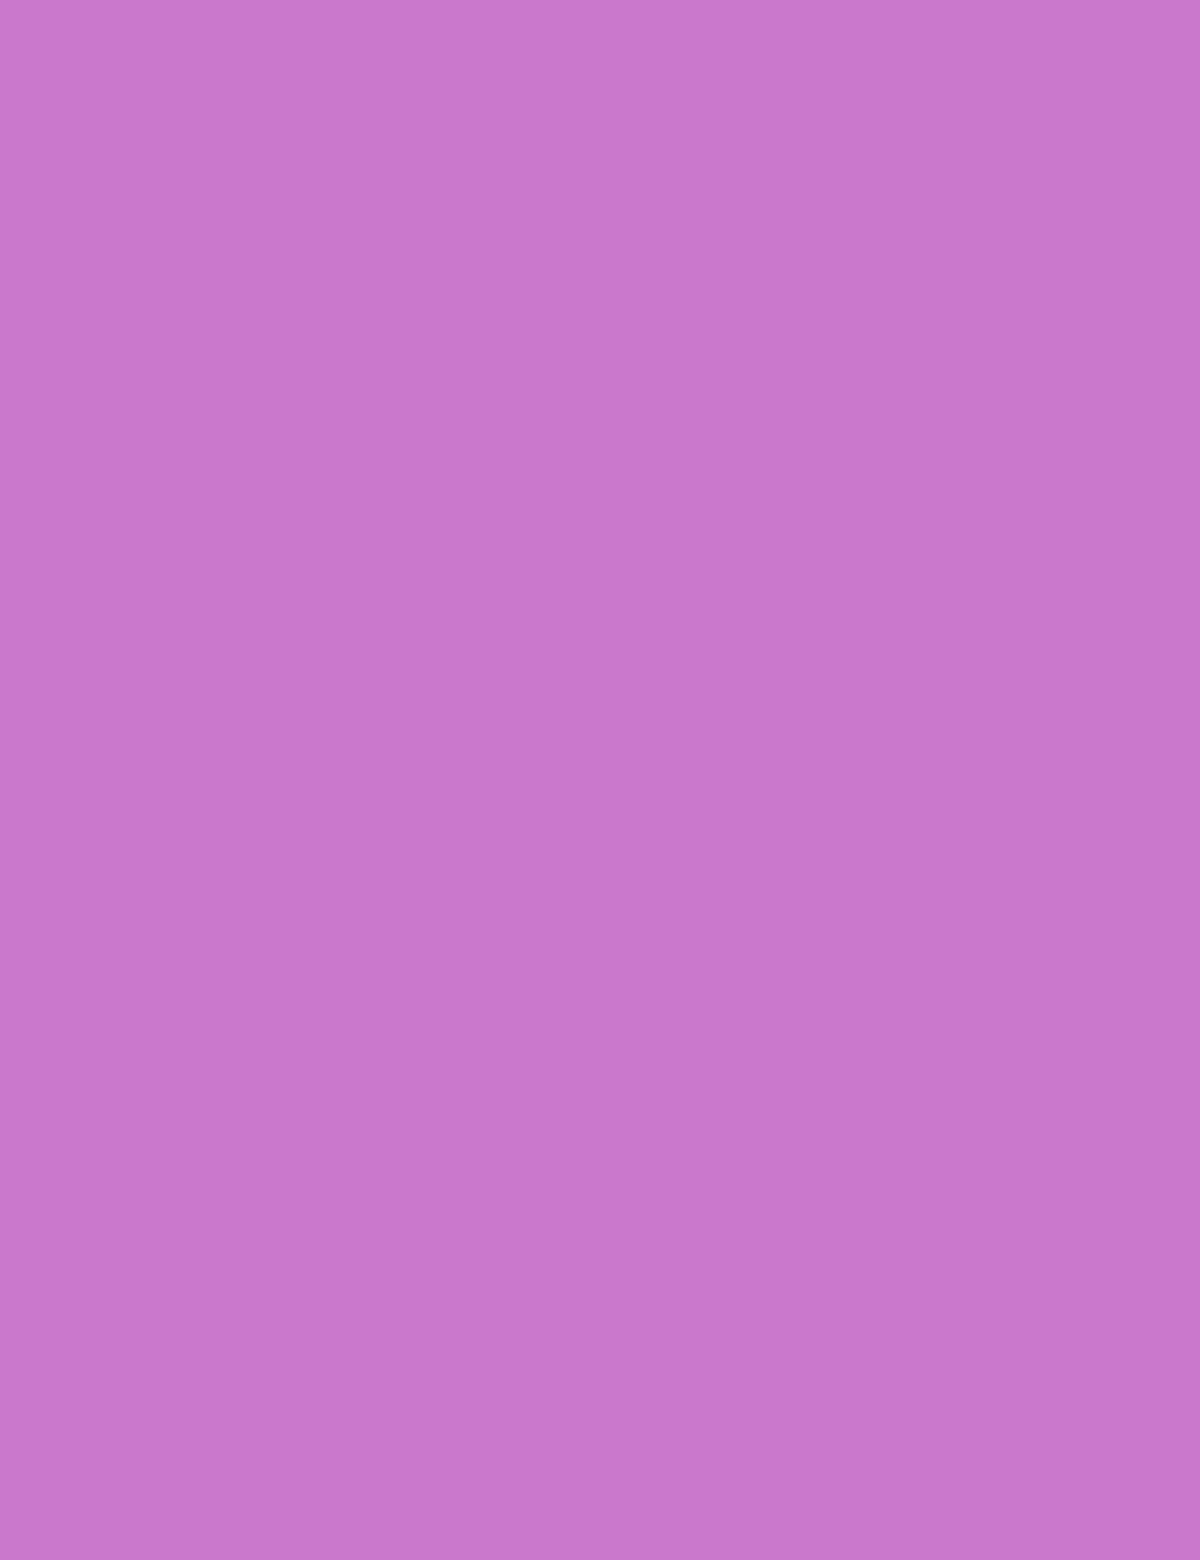 Light Violet Photography Solid Purple Cloth Backdrop Shopbackdrop